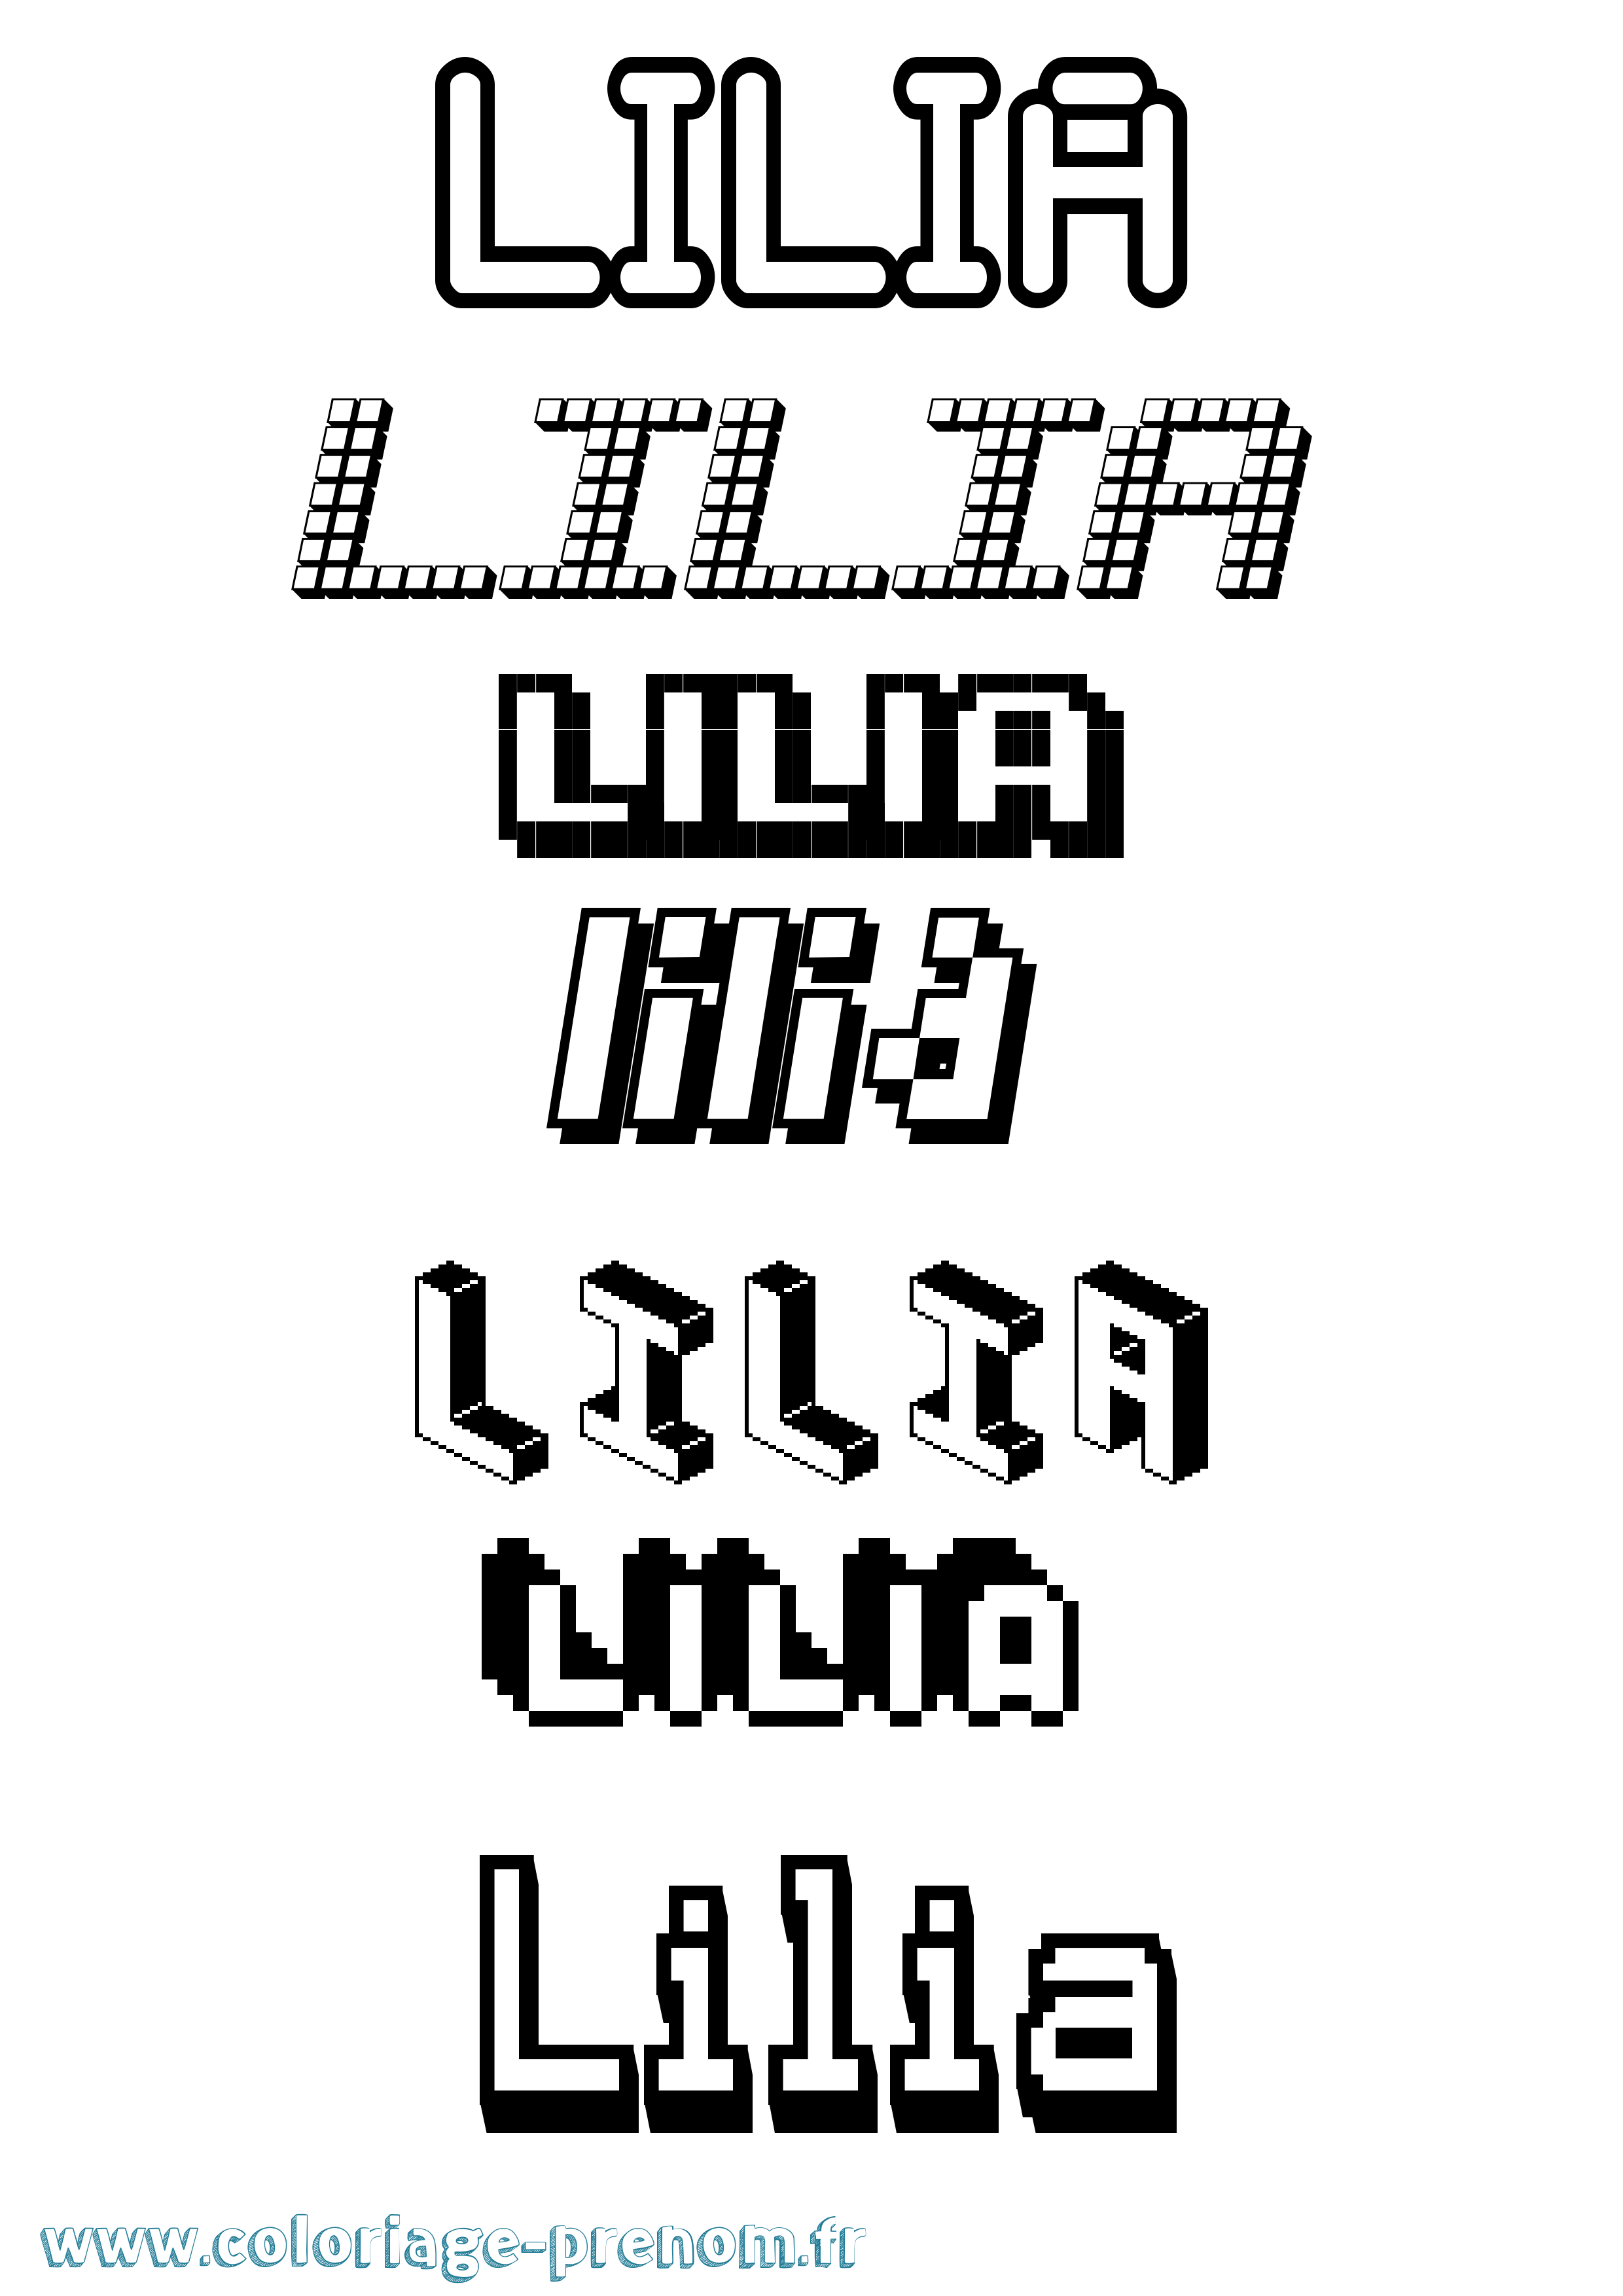 Coloriage prénom Lilia Pixel